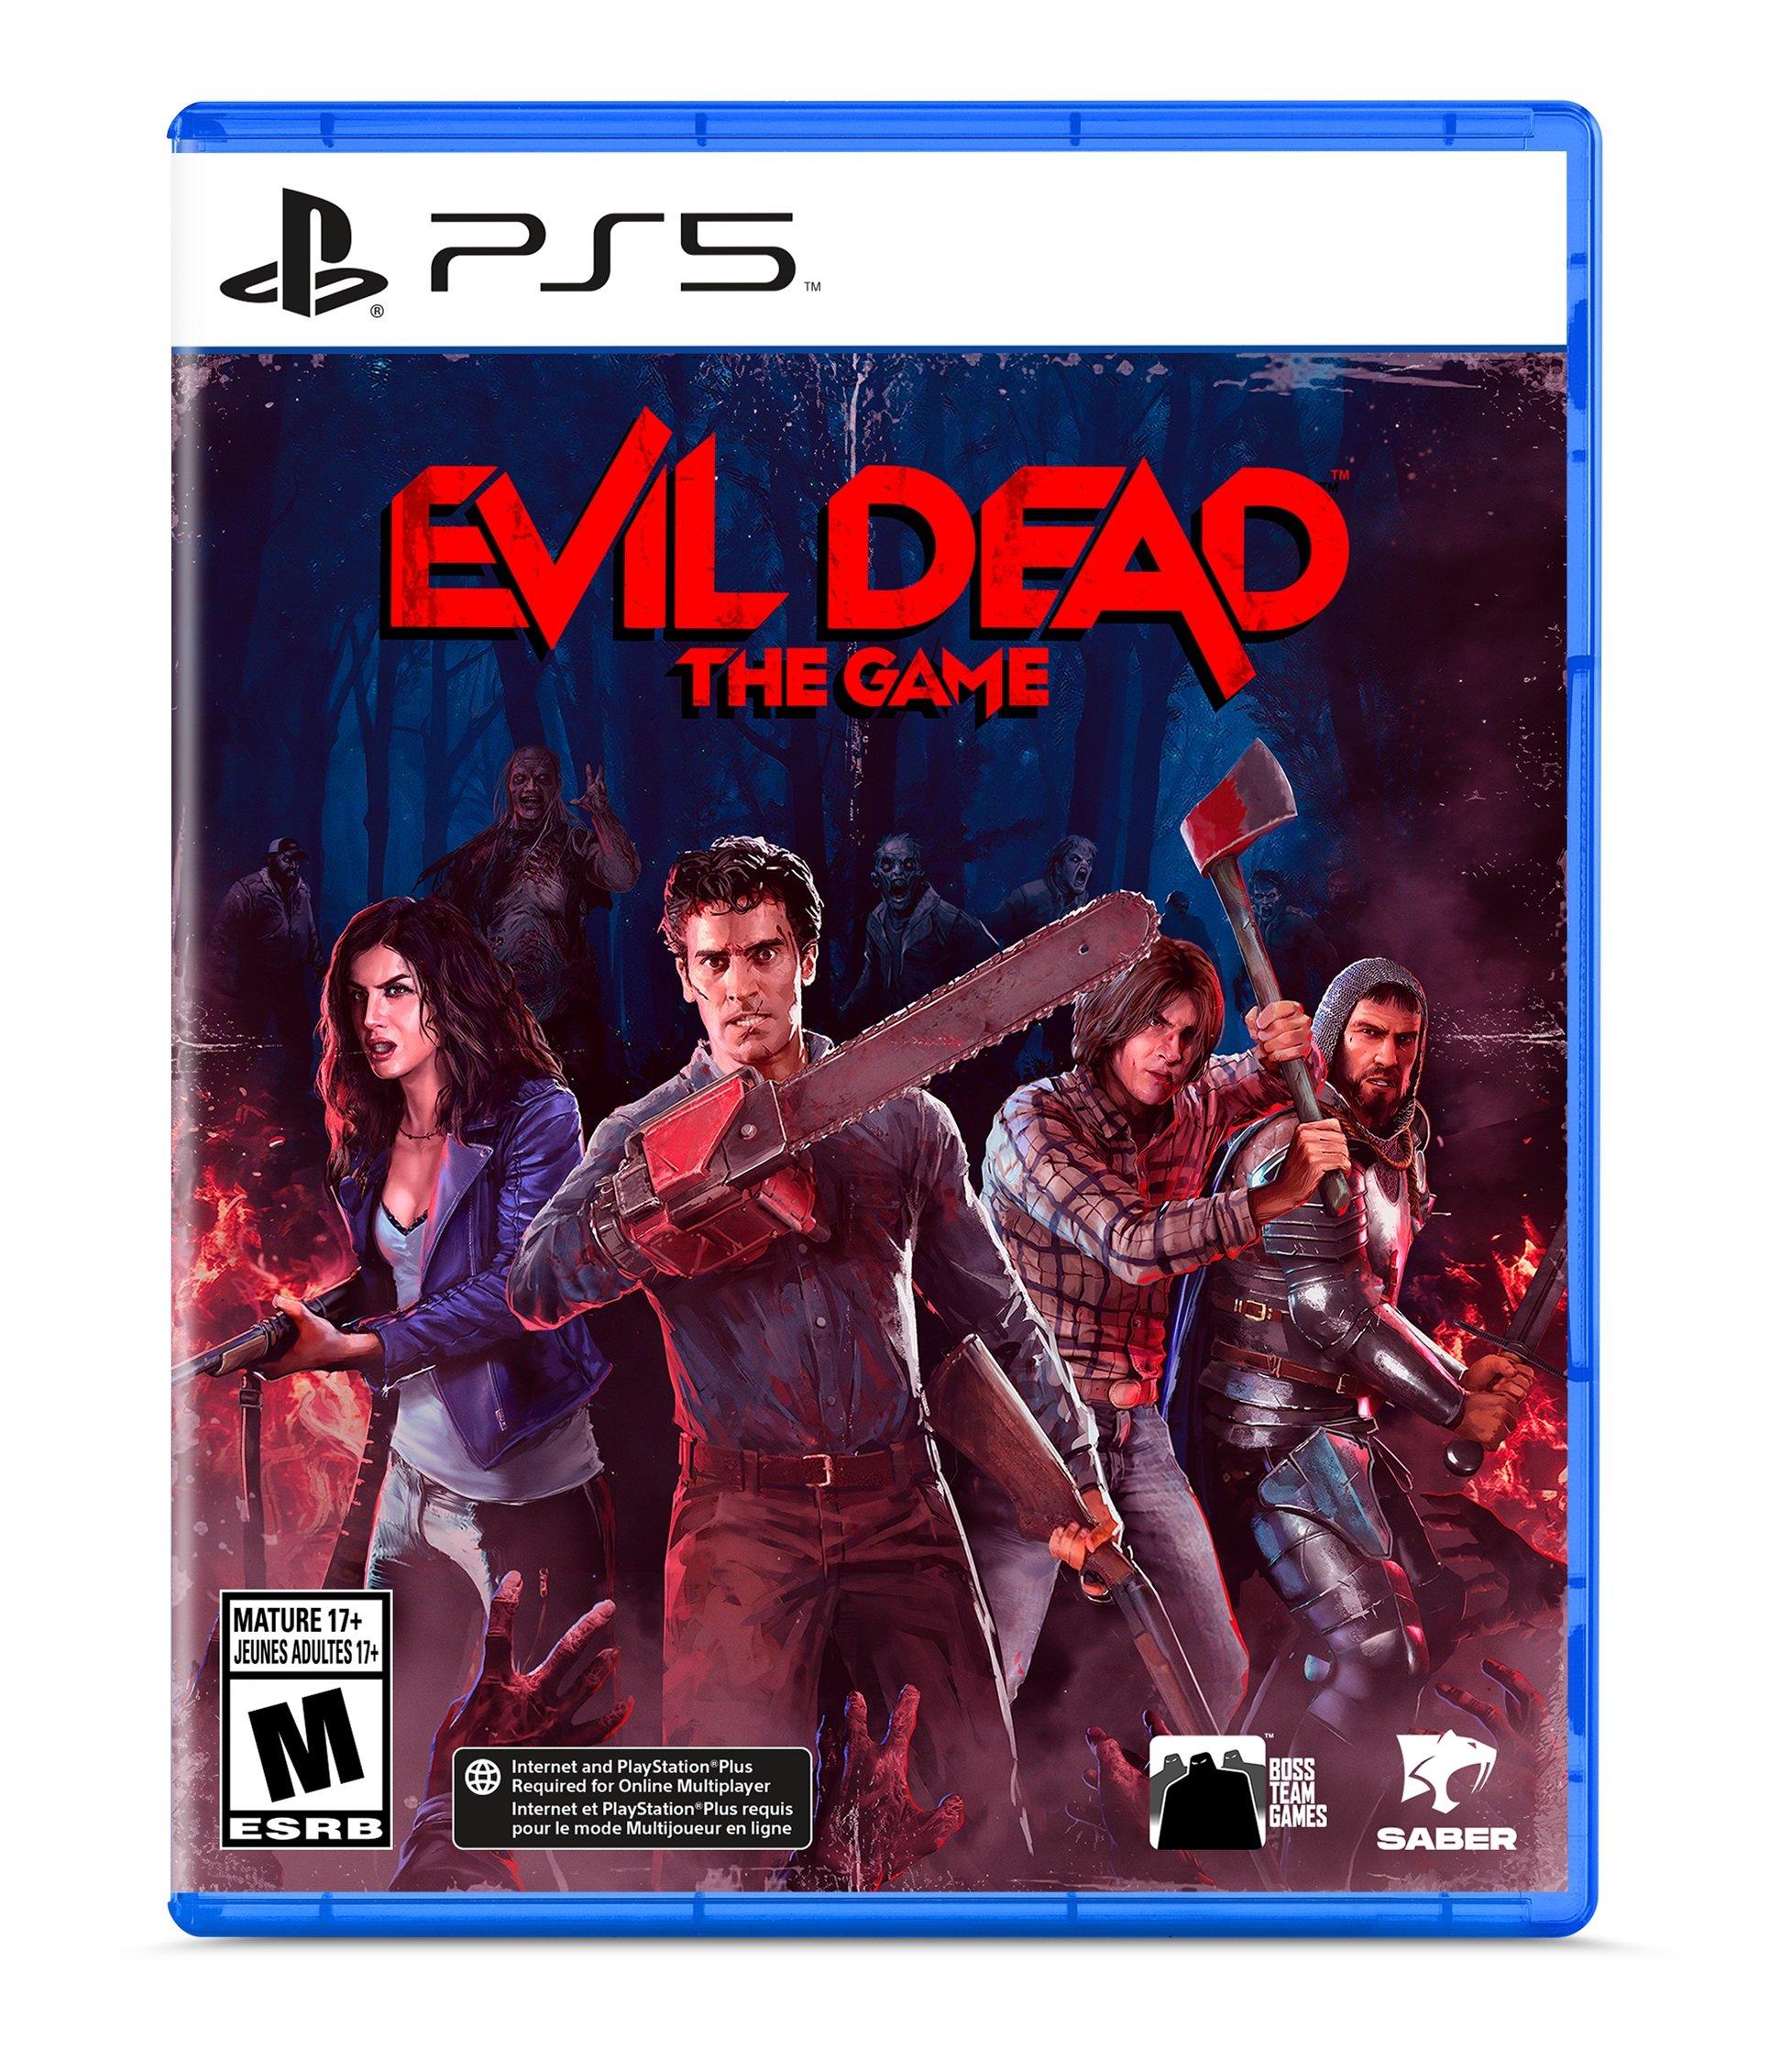 Evil Dead The Game PS5 File Size, Preload Date Revealed